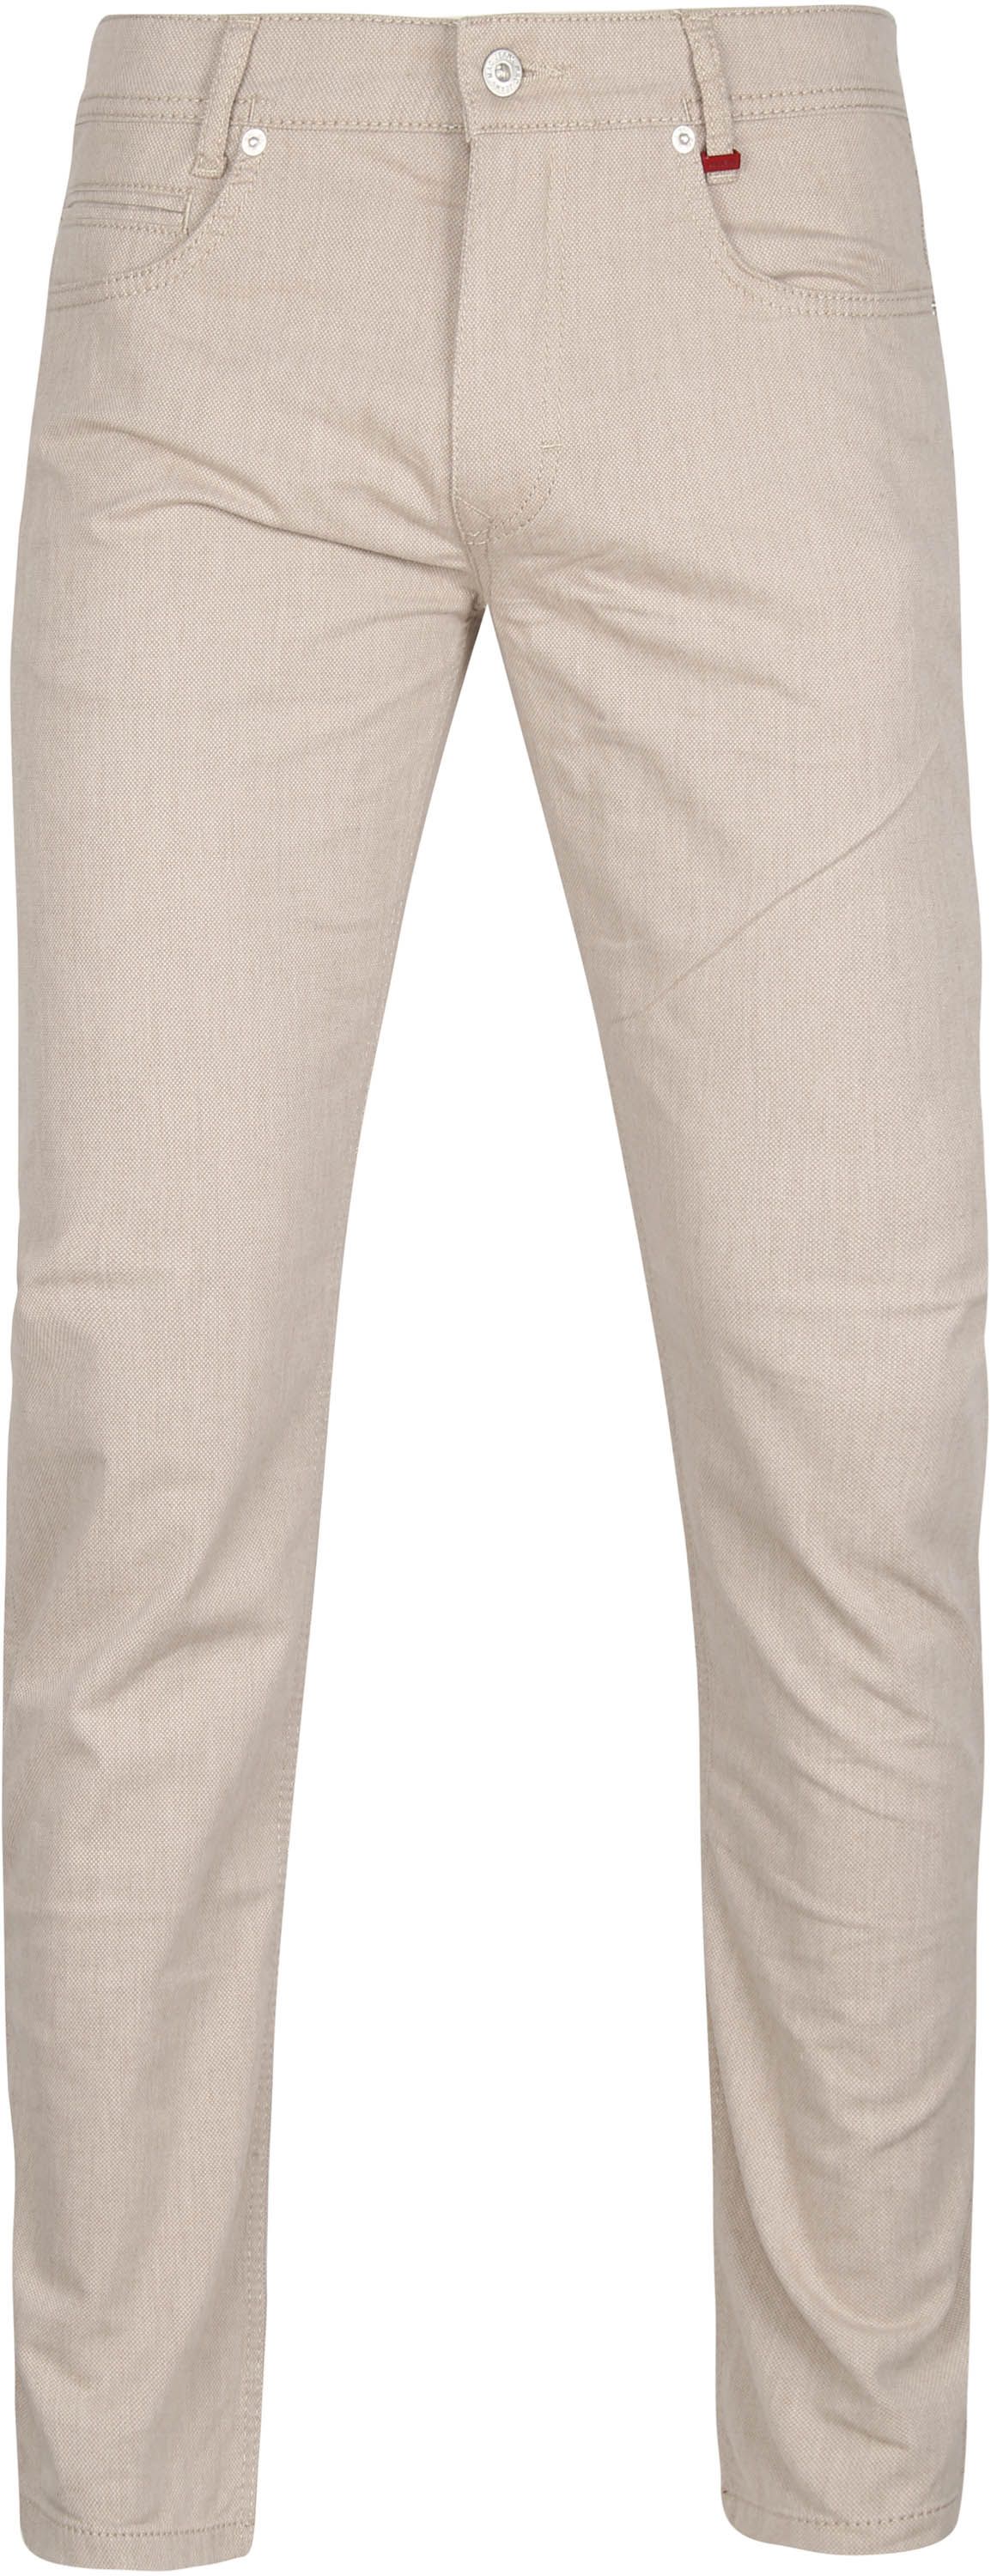 Mac Trousers Arne Khaki size W 36